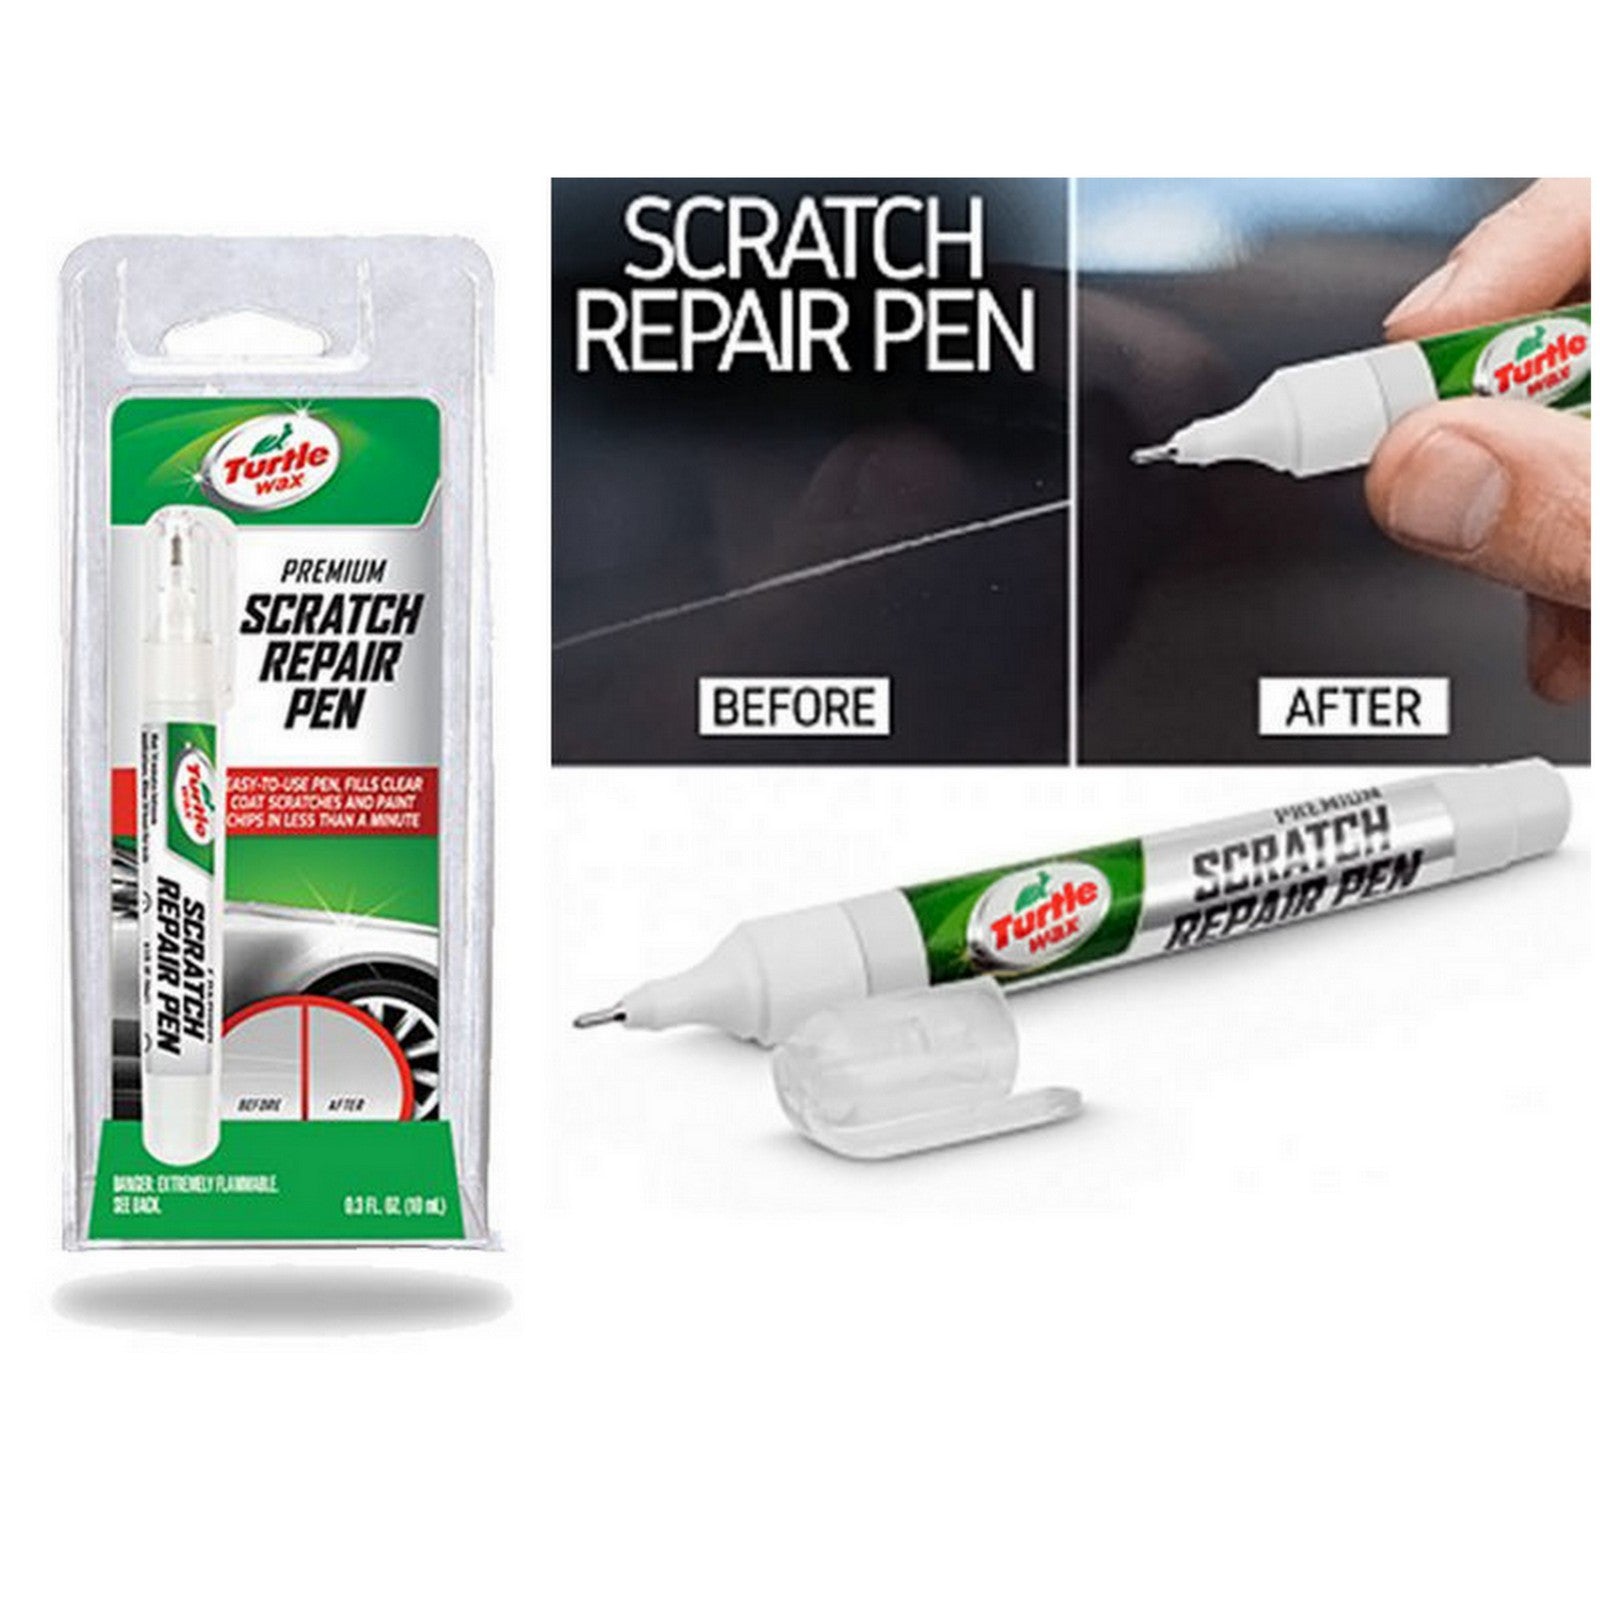 Turtle Wax Premium Scratch Repair Kit